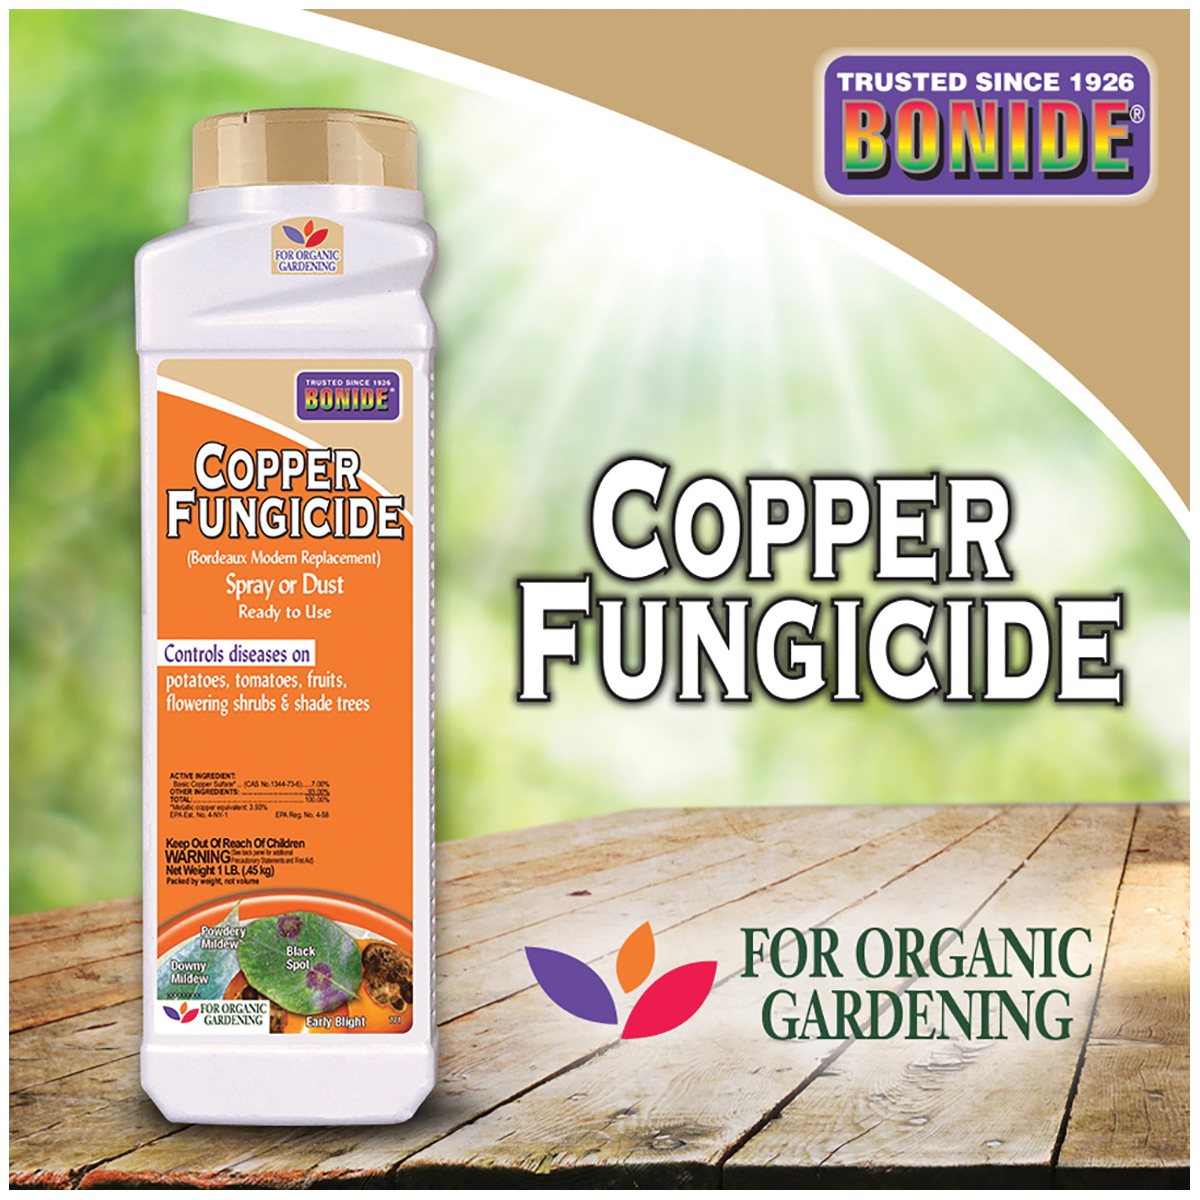 Bonide 771 Copper Fungicide Spray or Dust, Solid, Blue/Green, 1 lb Bottle - 4